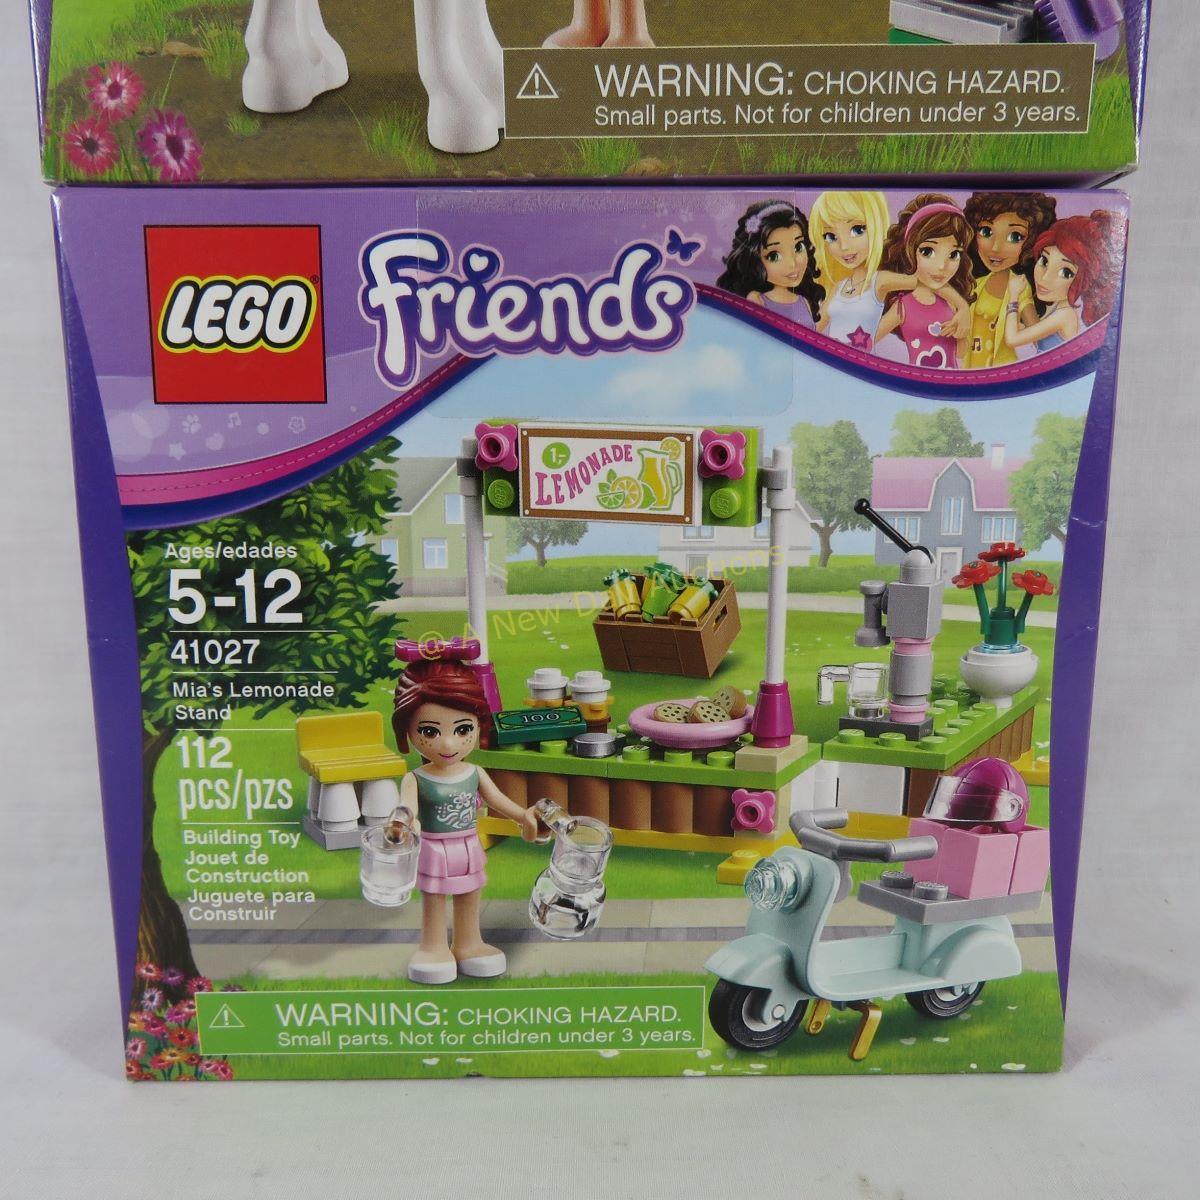 2 Sealed Lego Friends Sets 41027, 41003